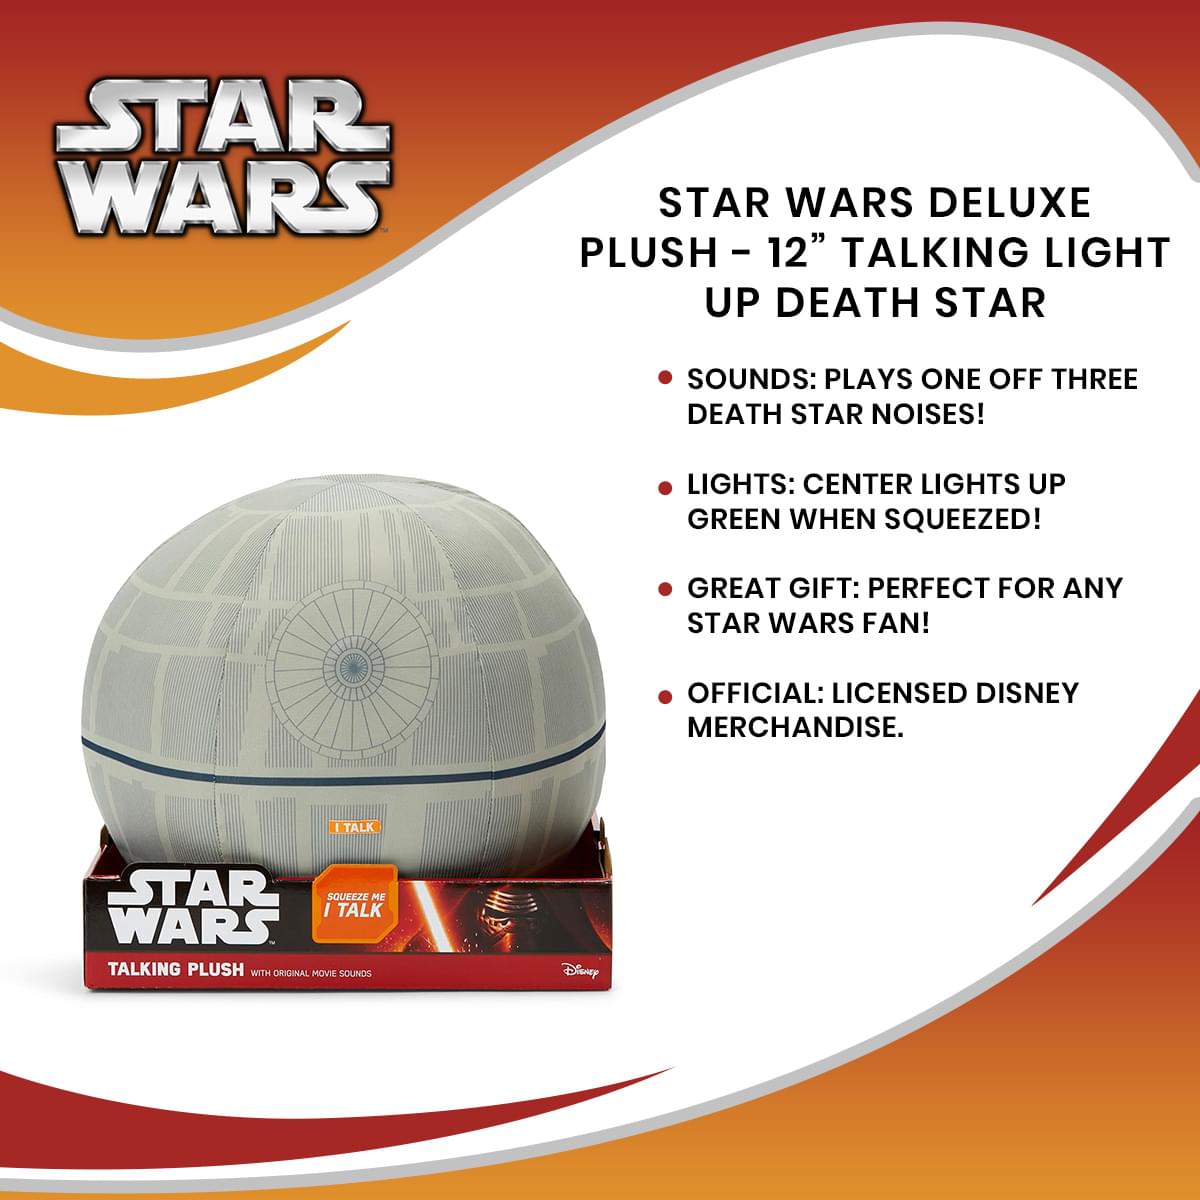 Star Wars Deluxe Plush - 12” Talking Light Up Death Star